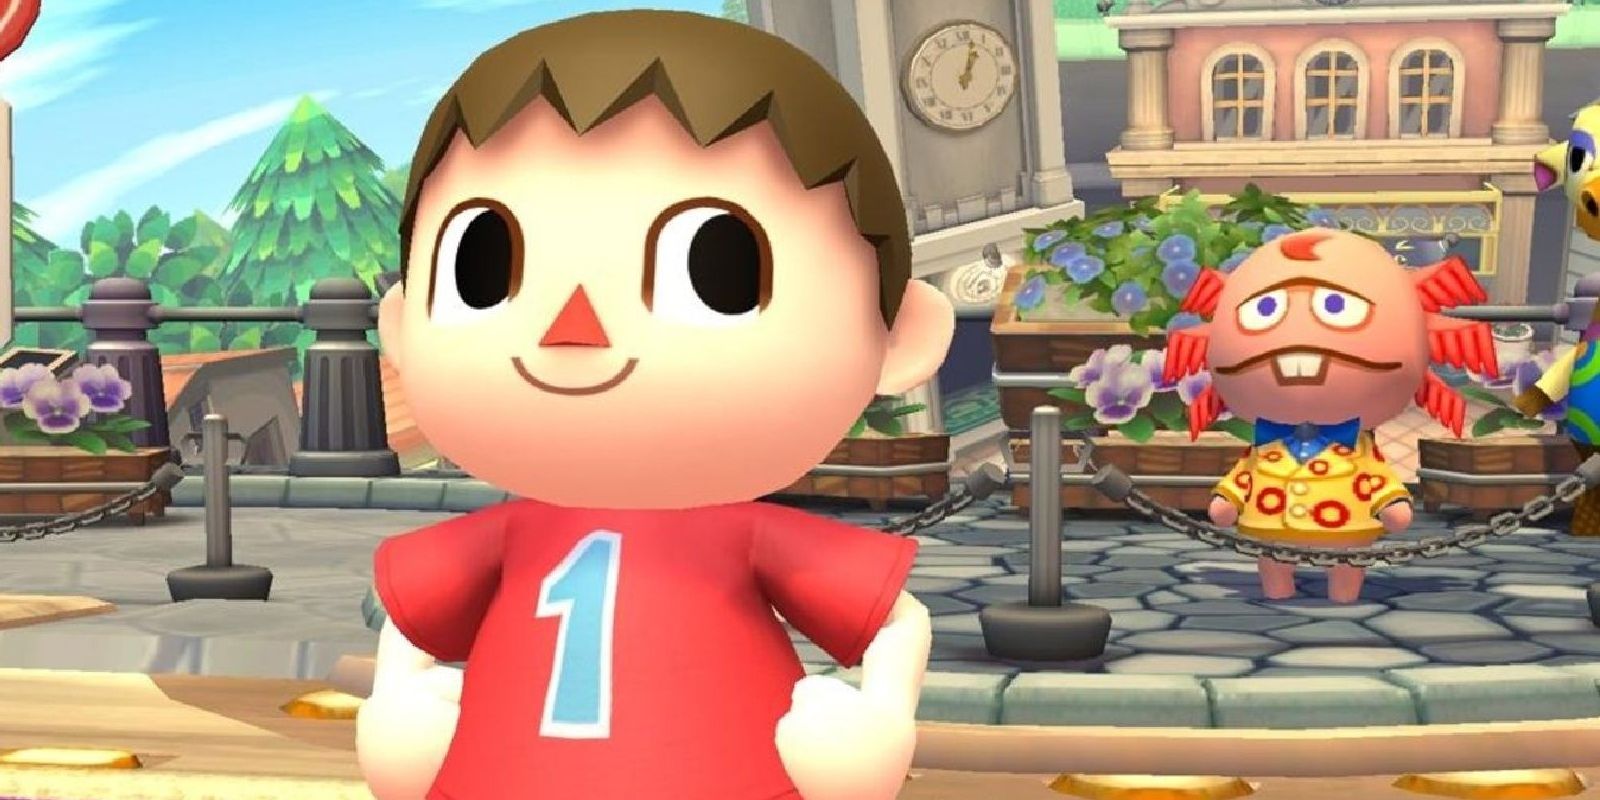 Animal Crossing Villager from Super Smash Bros